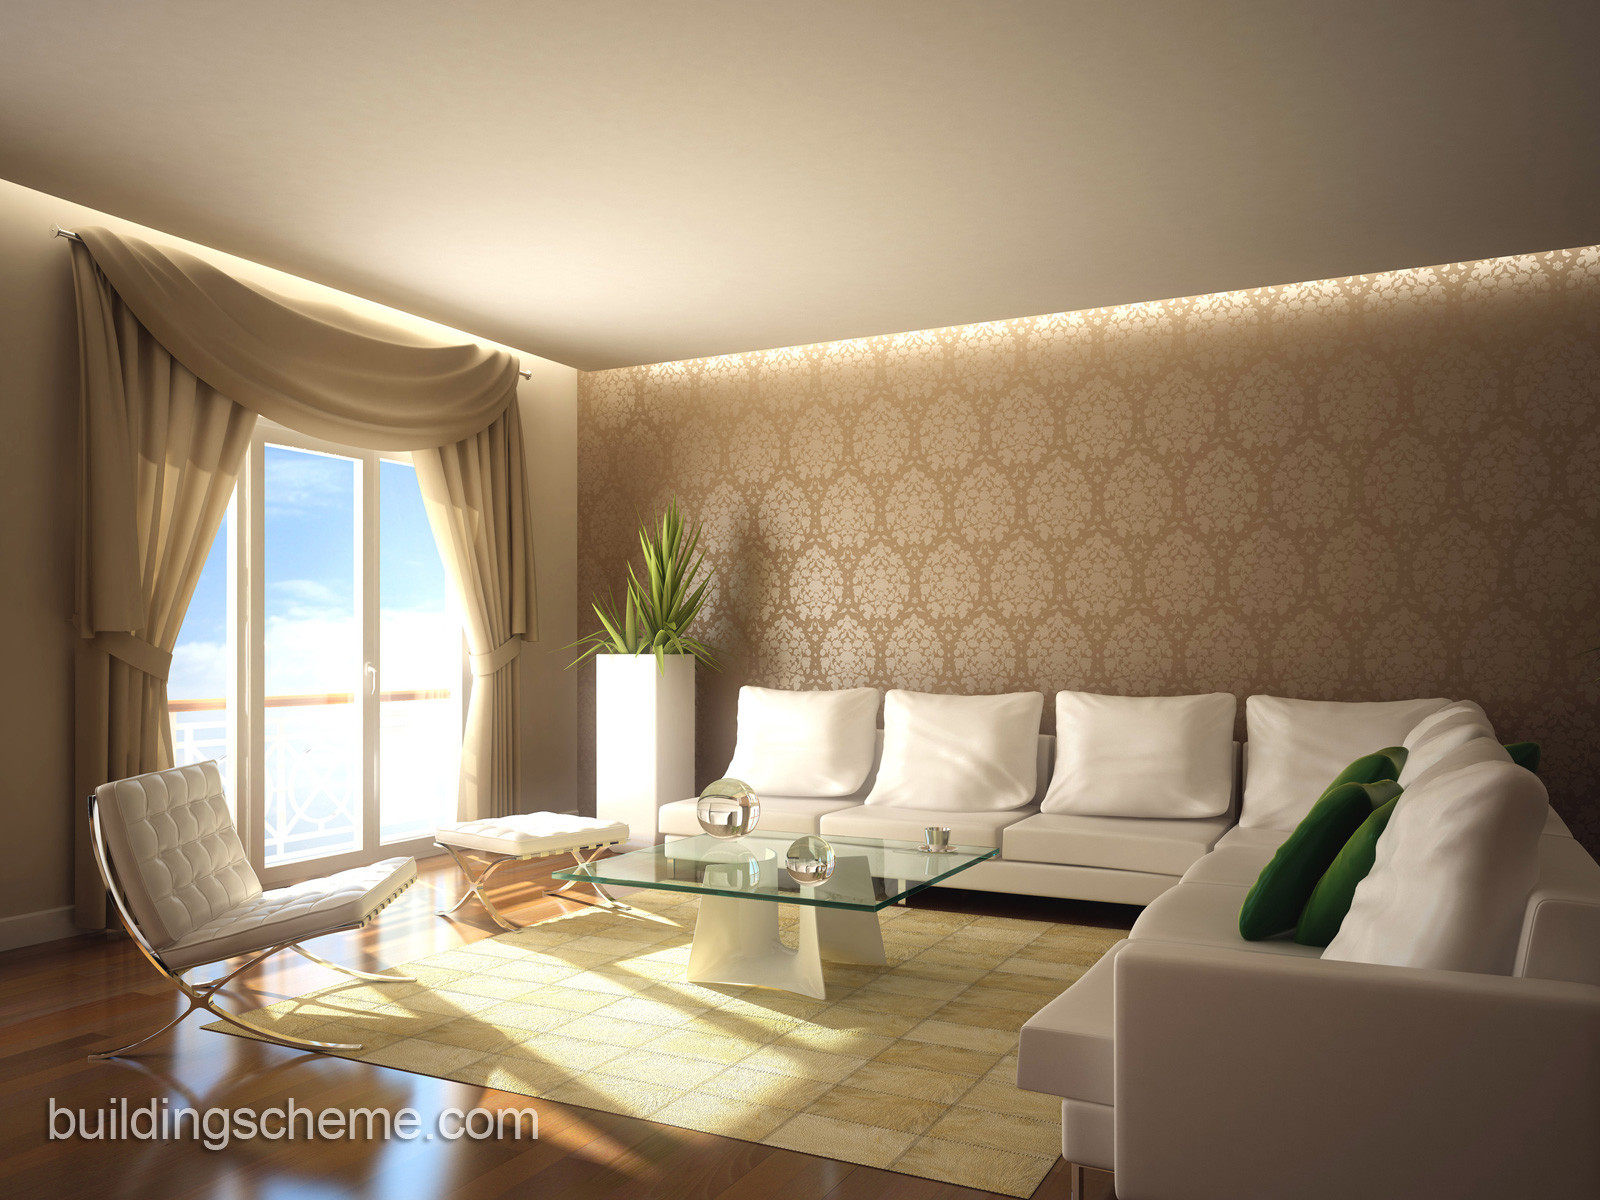 Wallpaper Design For Living Room
 Surprising Wallpaper Design for Living Room